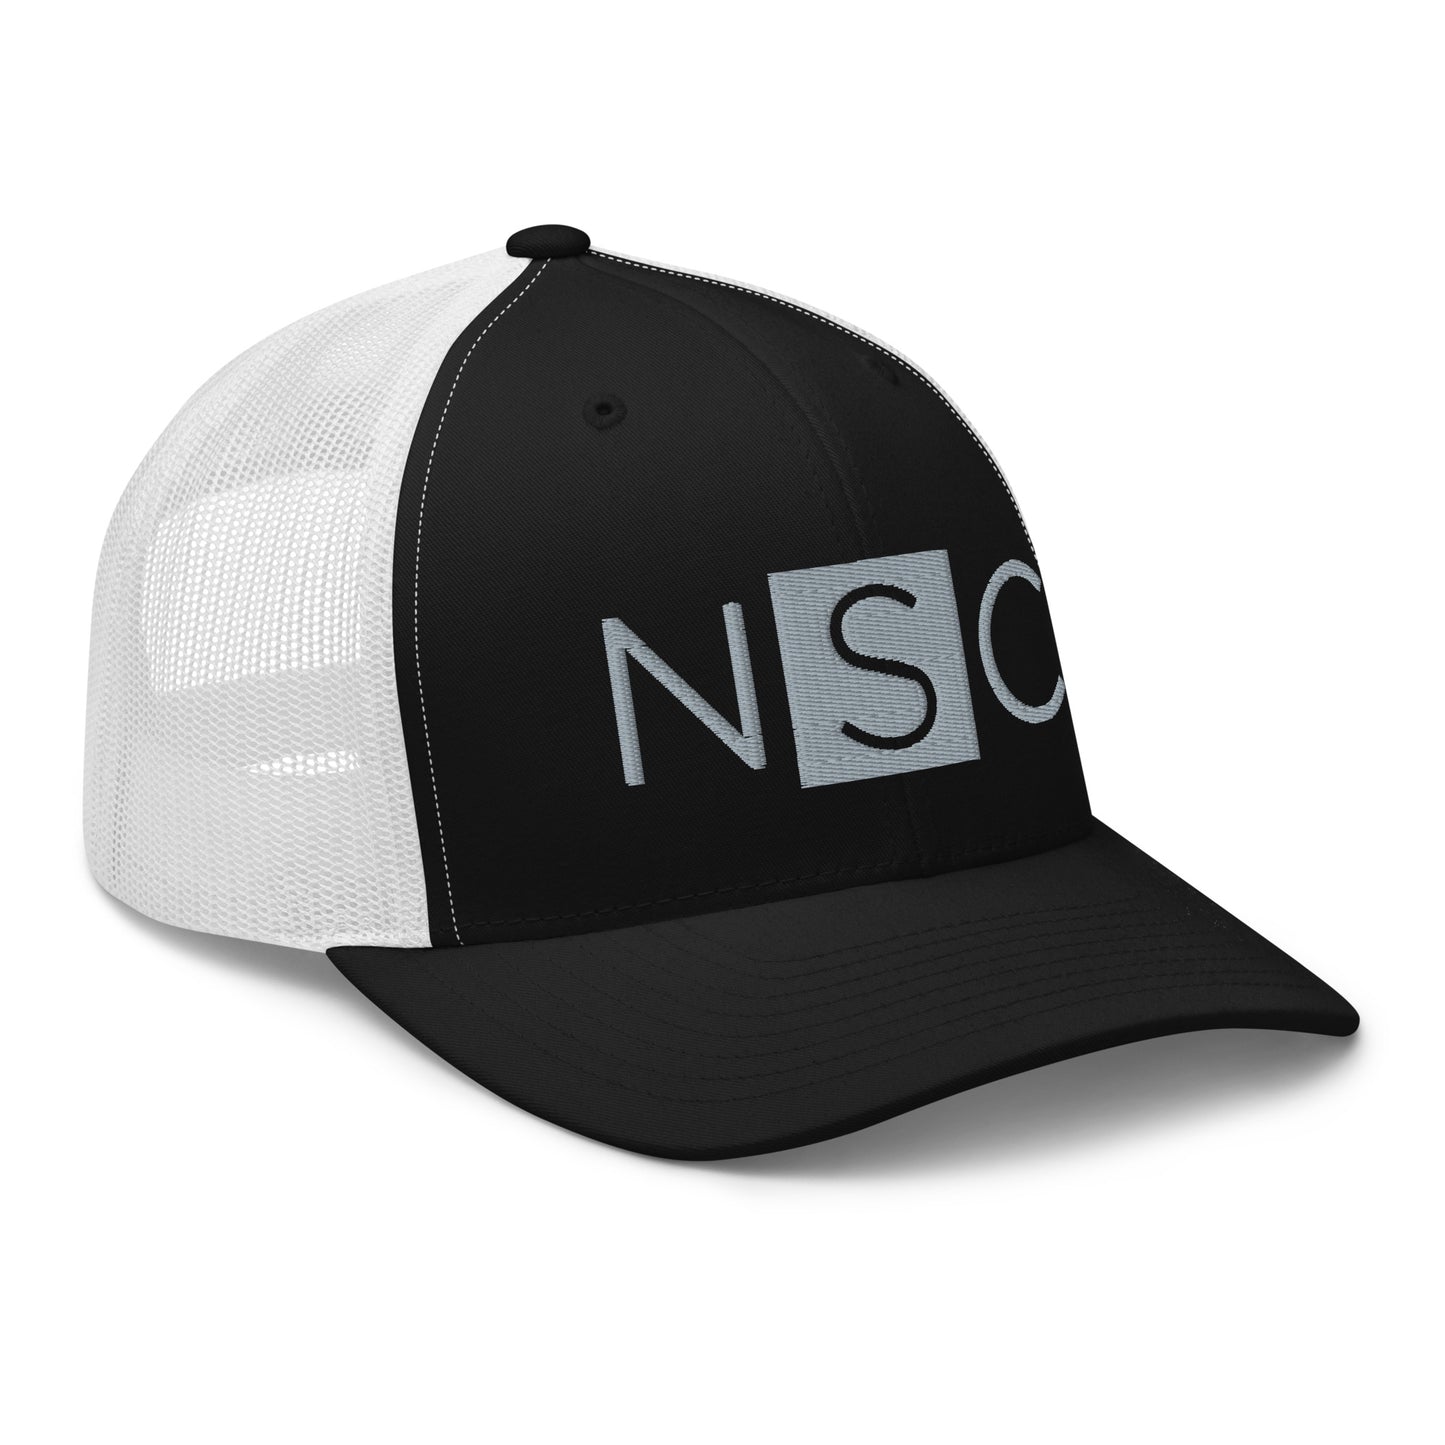 Nashville Sampling Co (NSC) Embroidered Trucker Cap